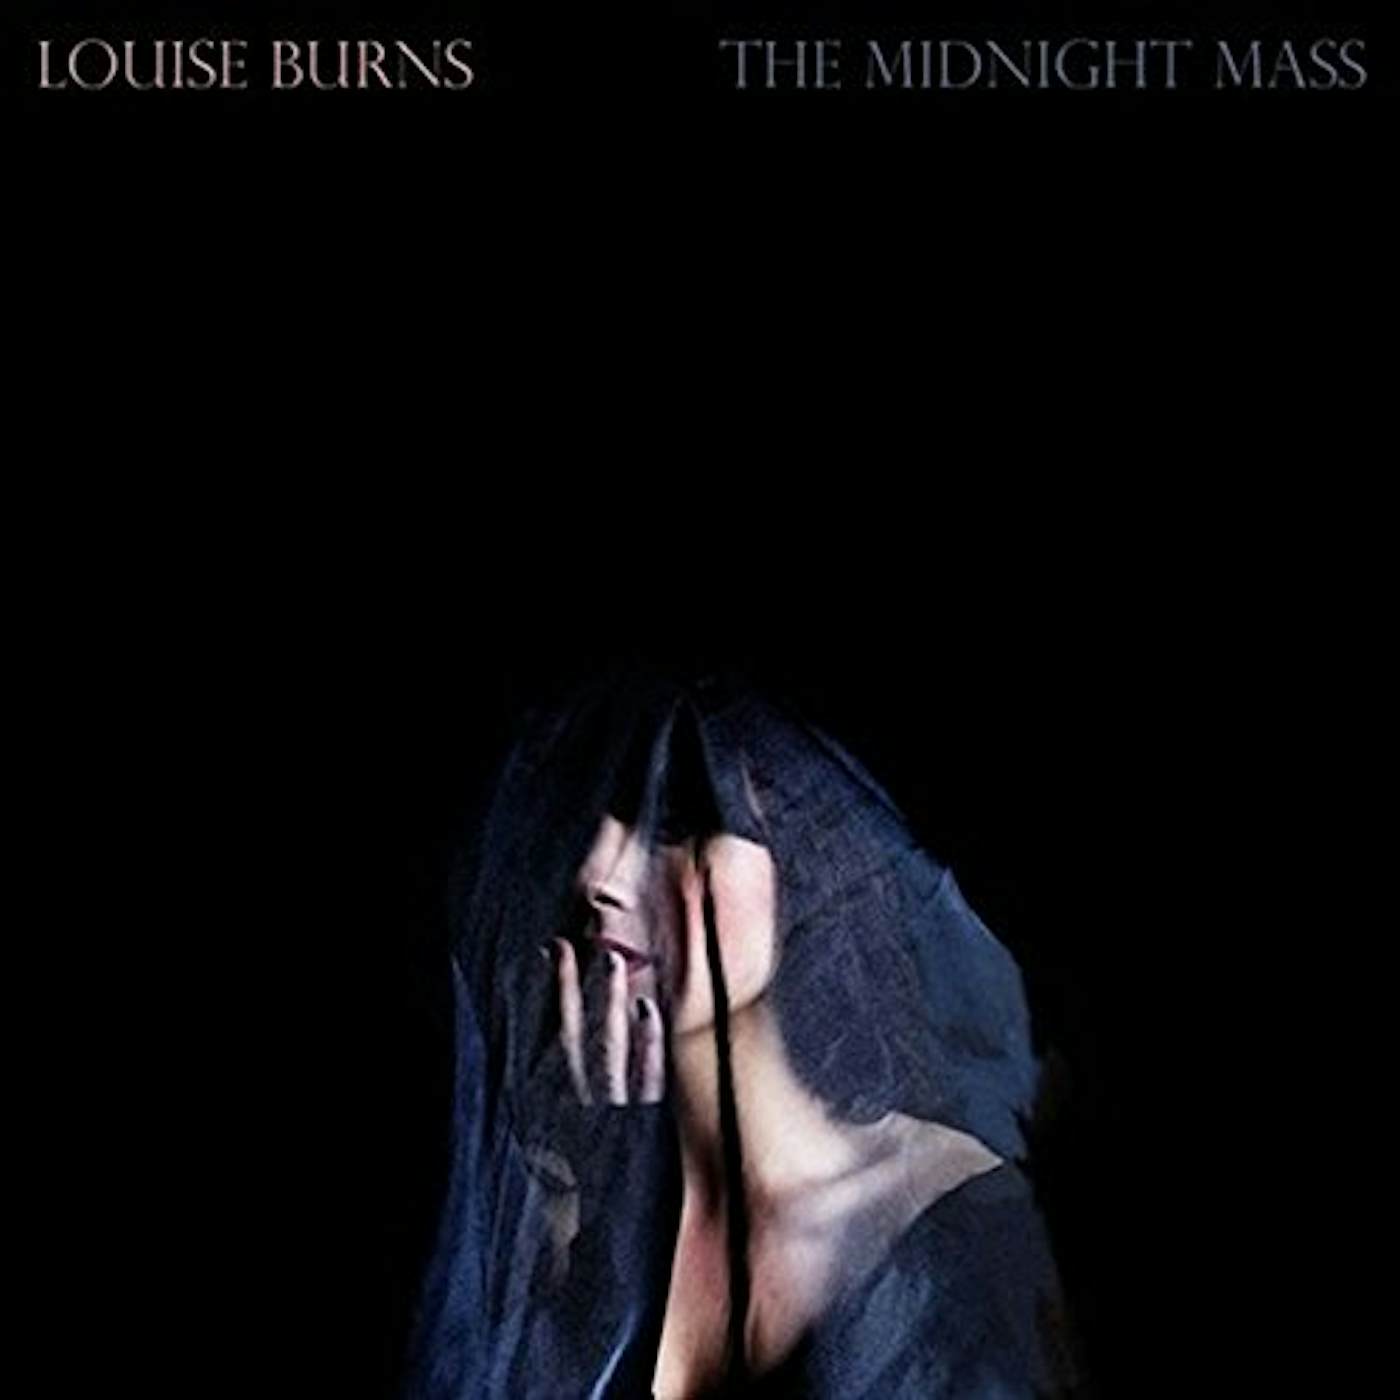 Louise Burns MIDNIGHT MASS Vinyl Record